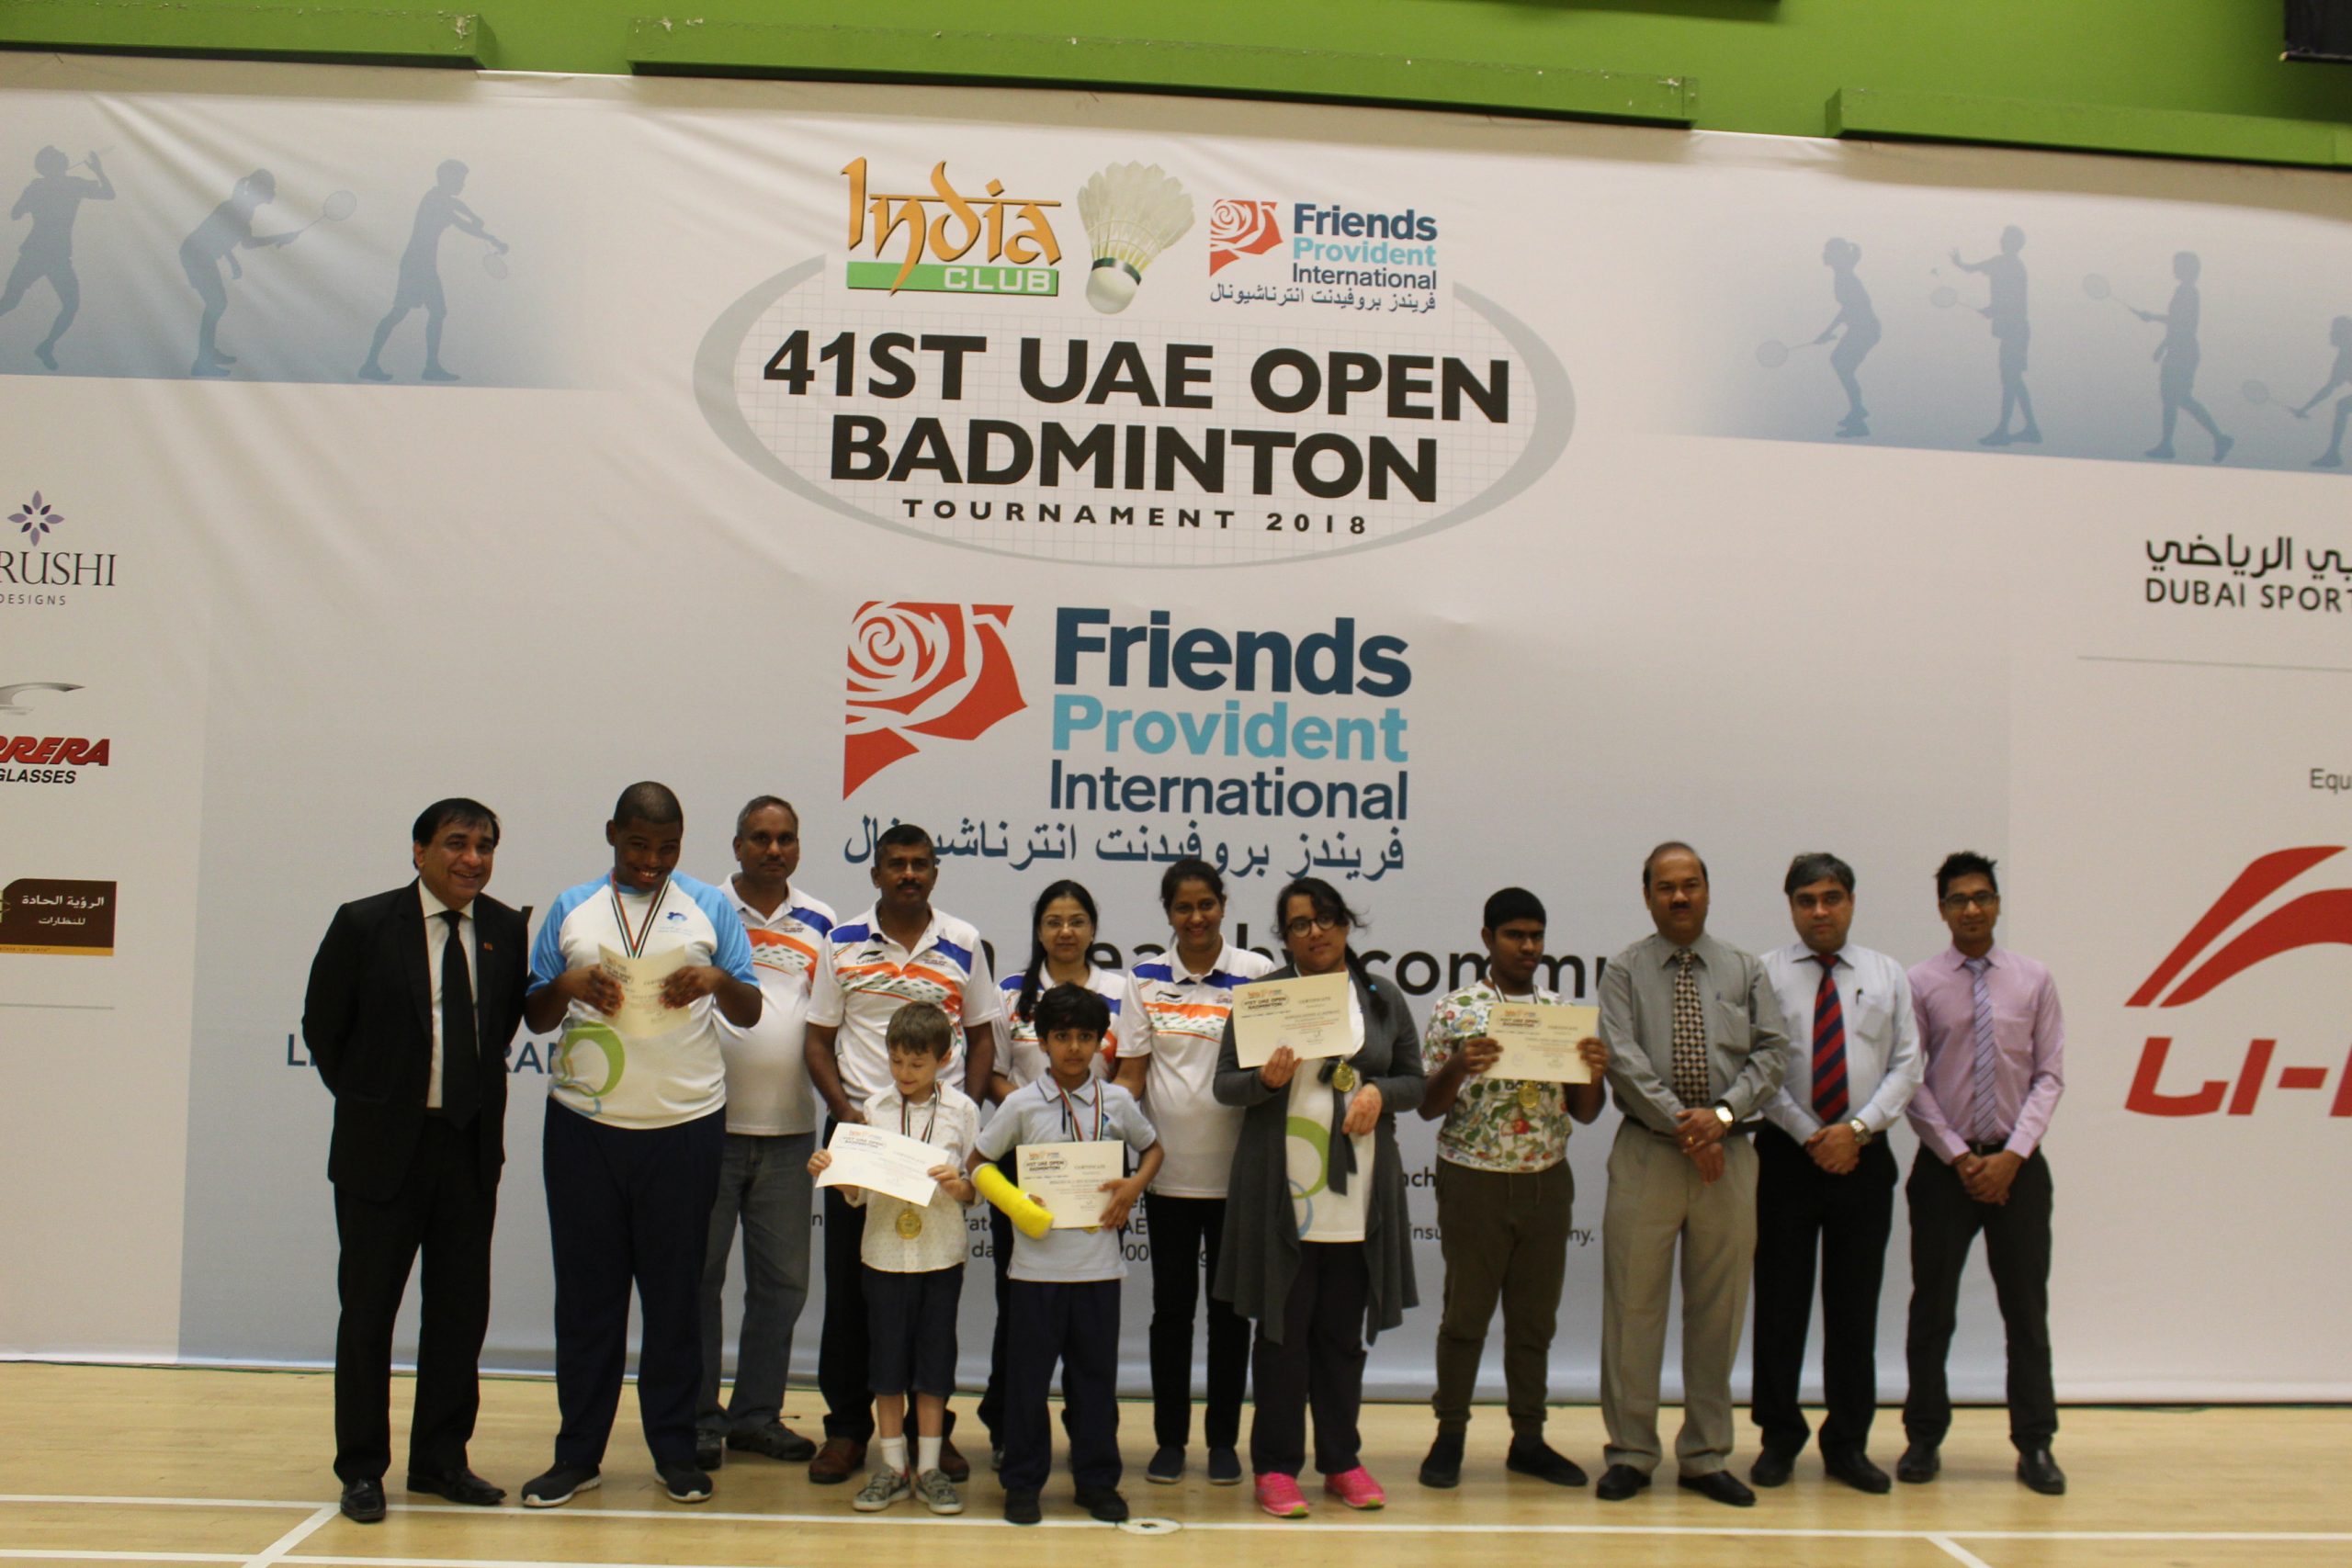 41st UAE Open Badminton 2018 Press Conference